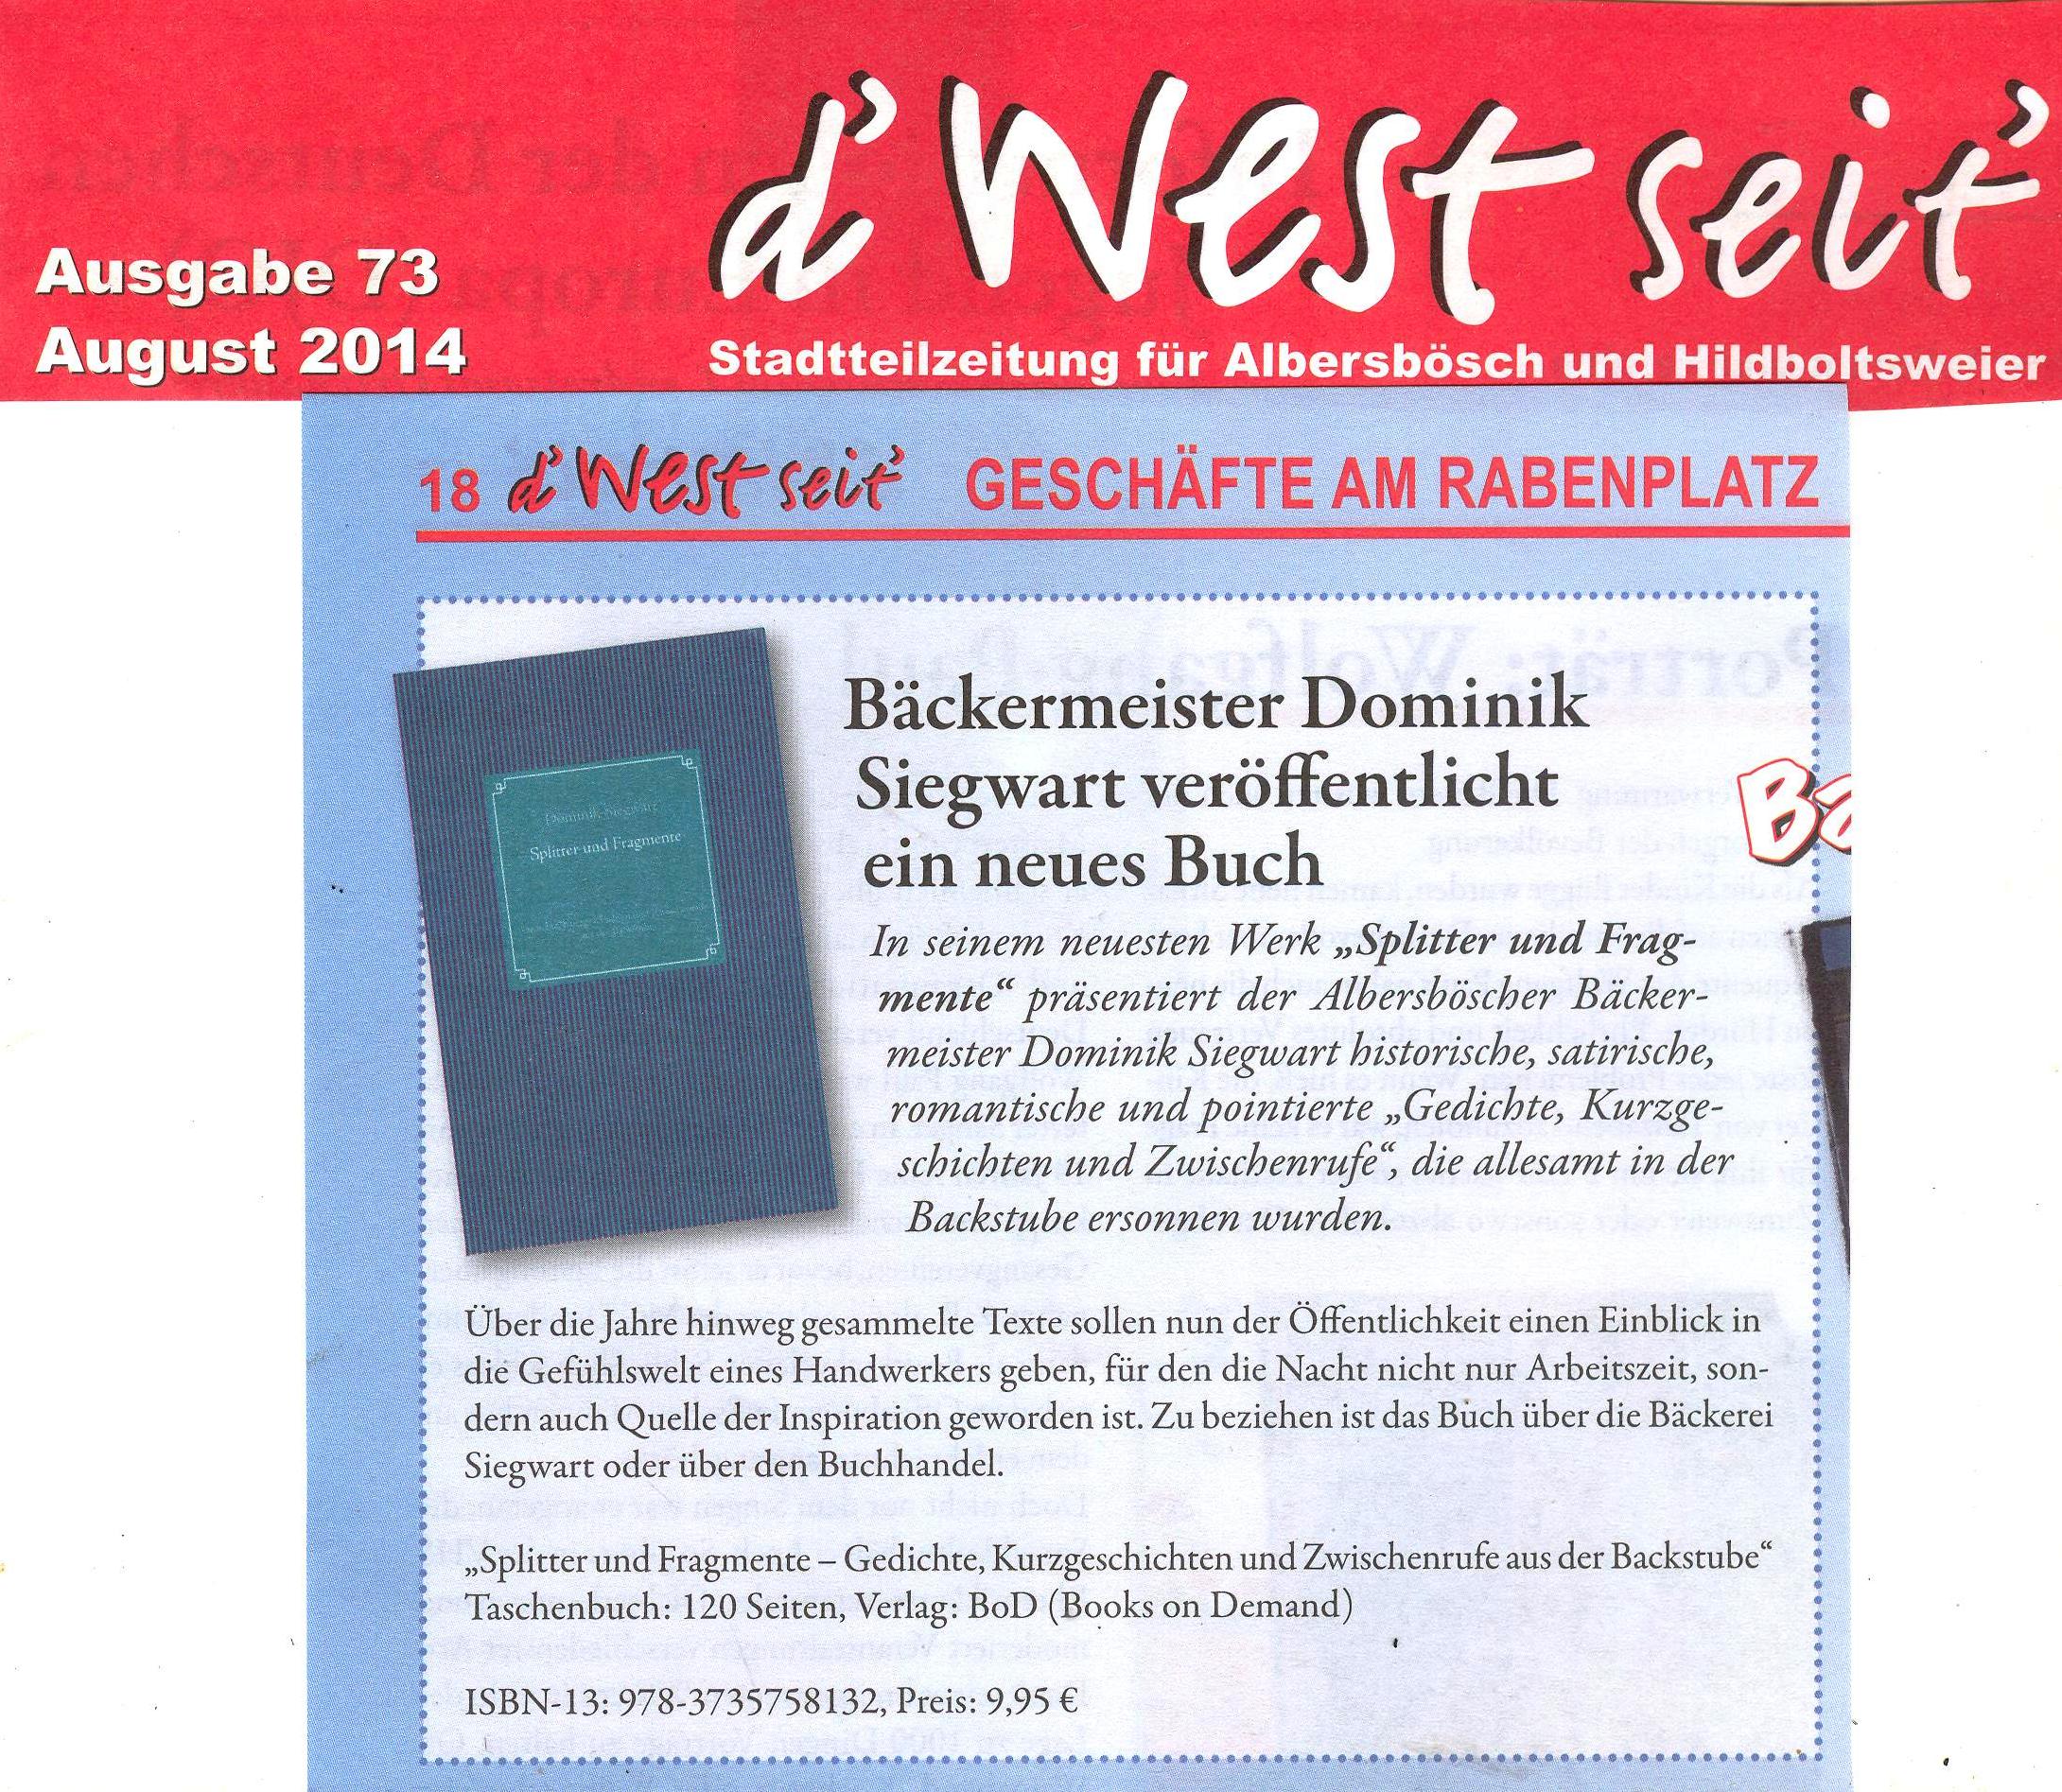 WestSeit - Buchbesprechung.jpg